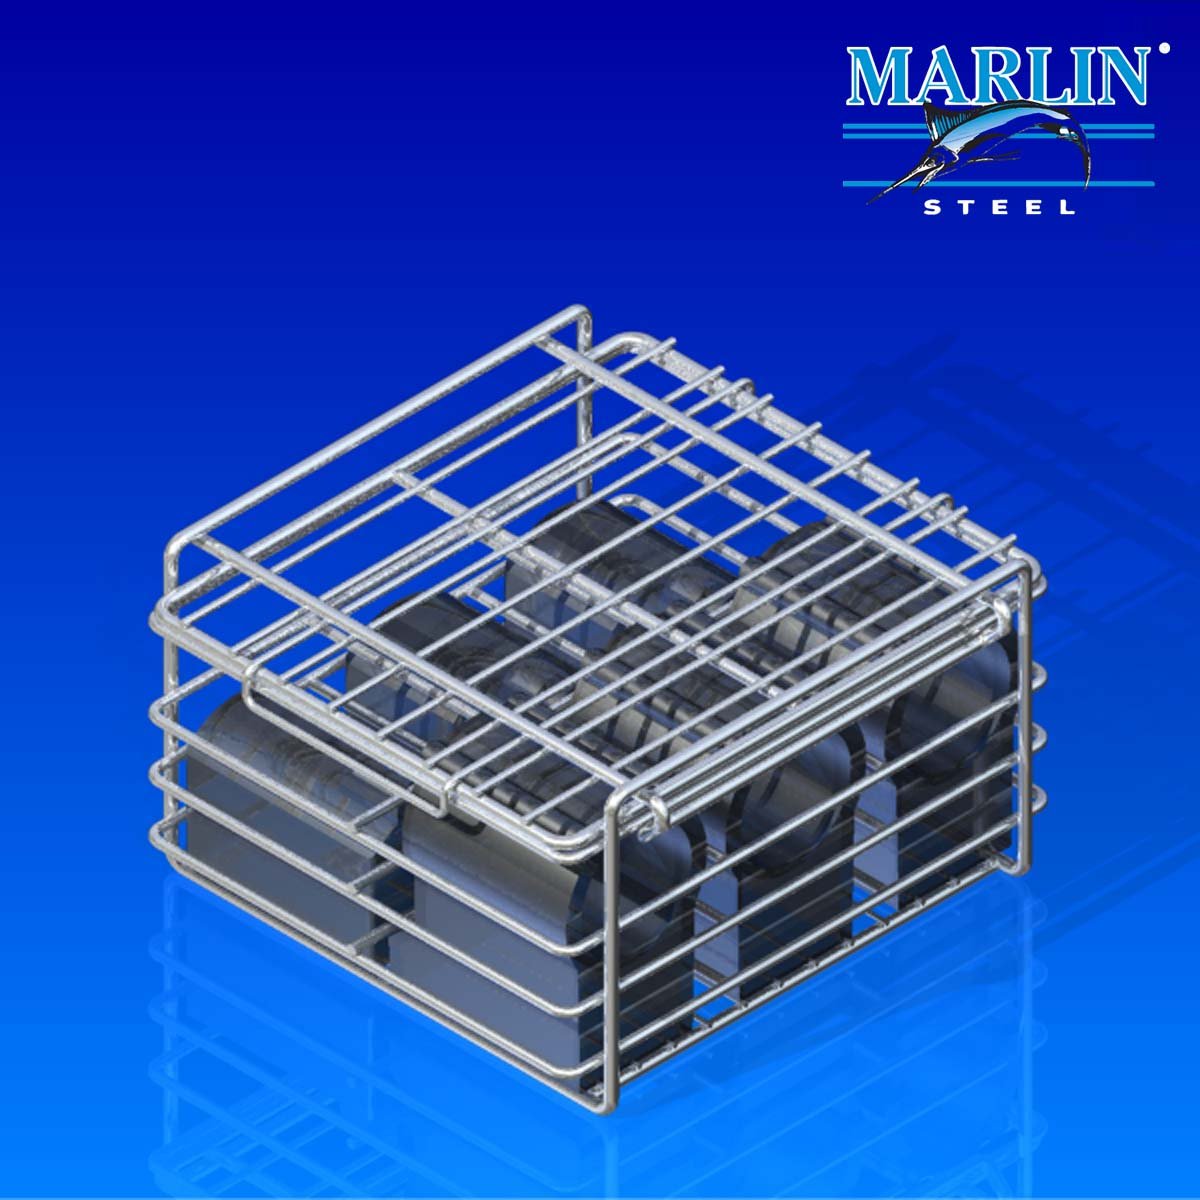 Marlin Steel Wire Basket with Lid 288003-1.jpg